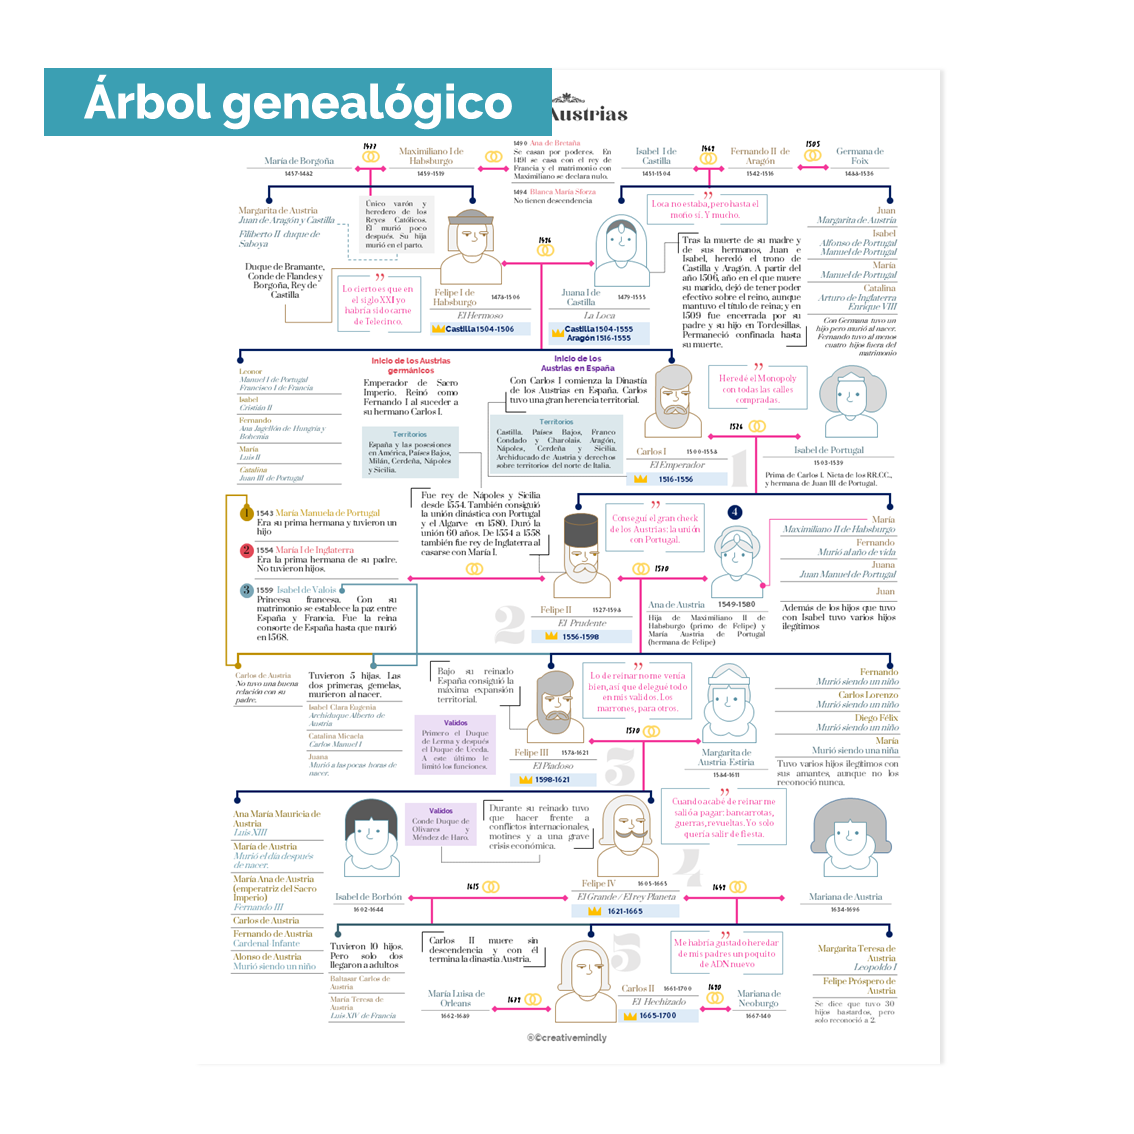 arbol genealogico austrias